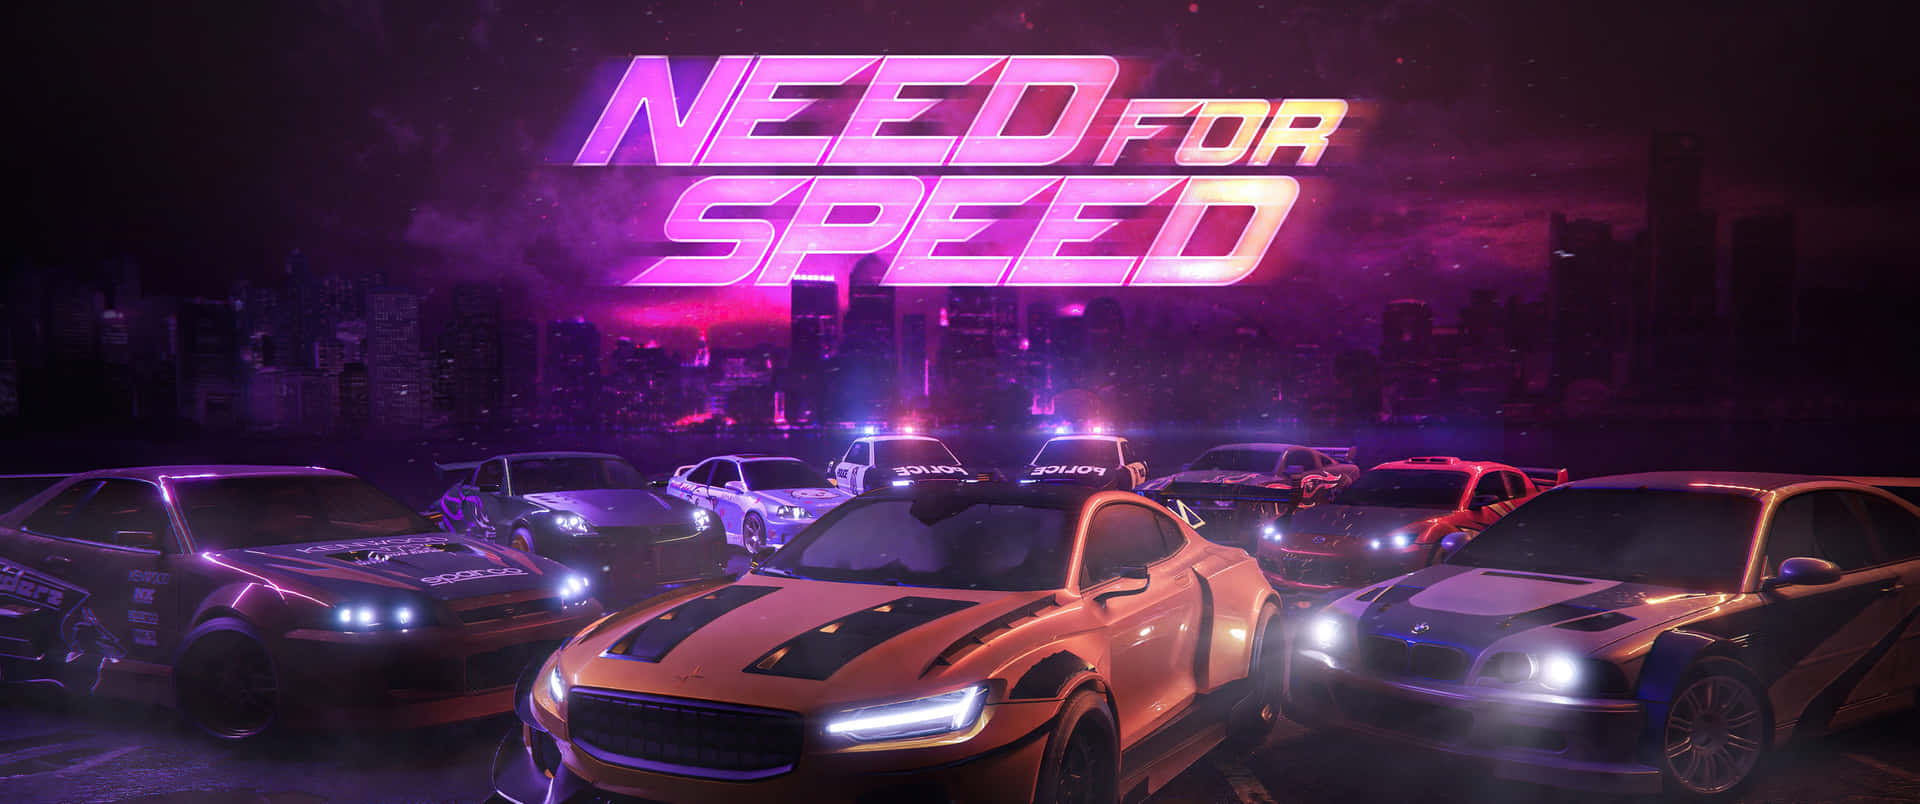 Fondode Pantalla Del Logo Rosado De Need For Speed